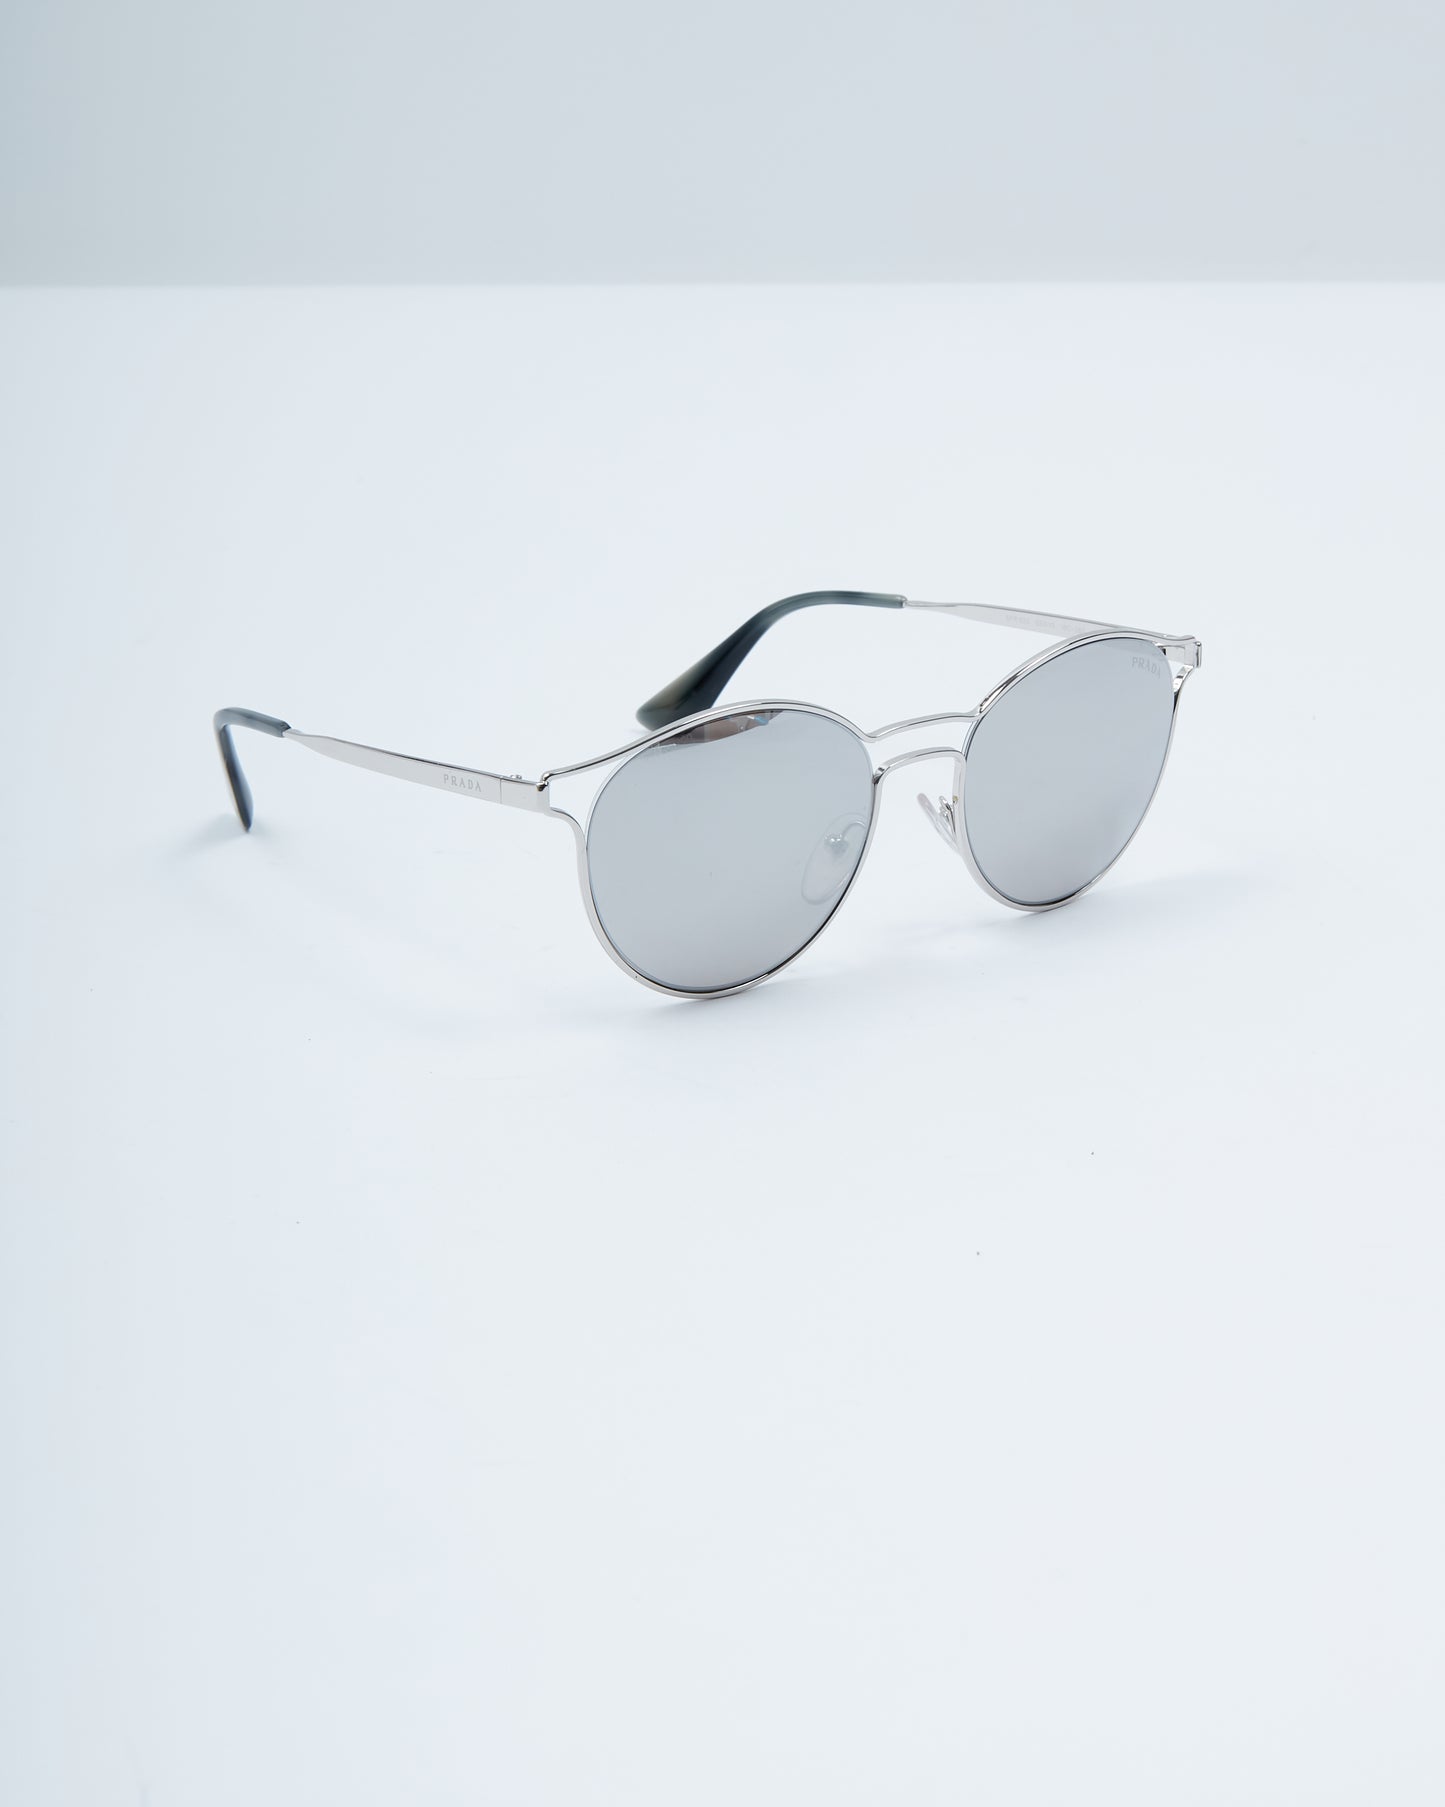 Prada Silver Round SPR625 Sunglasses